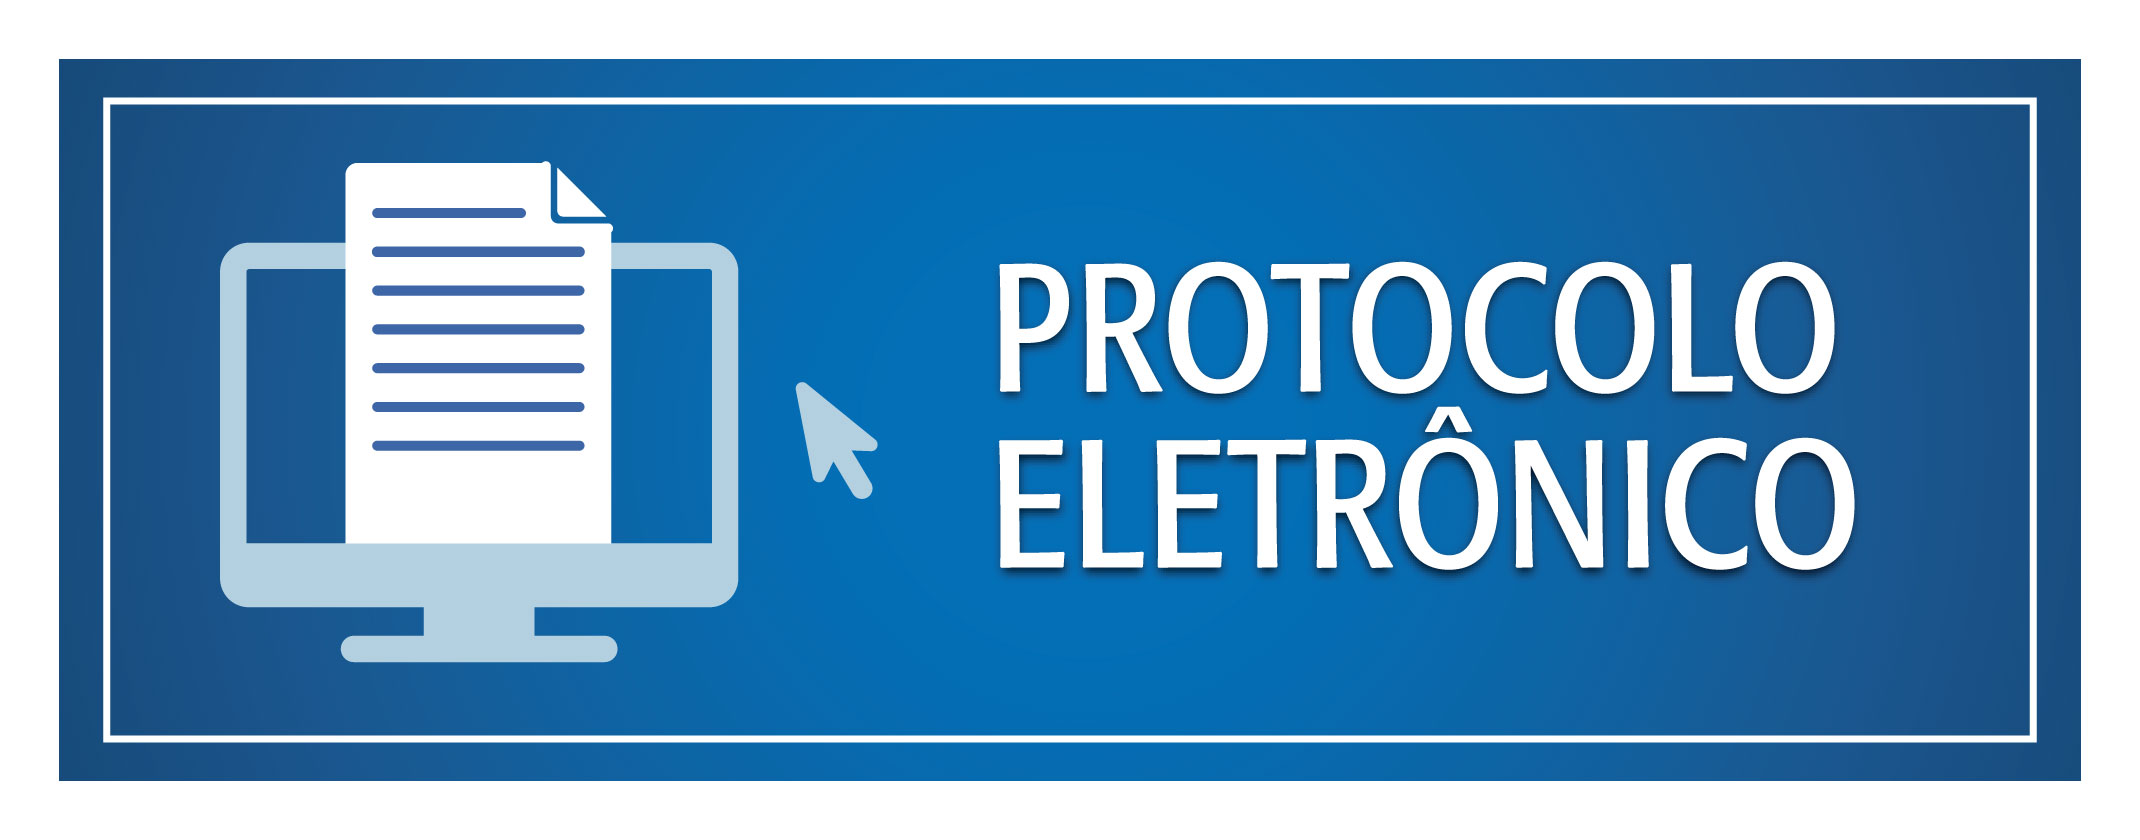 Protocolo eletrônico na Câmara